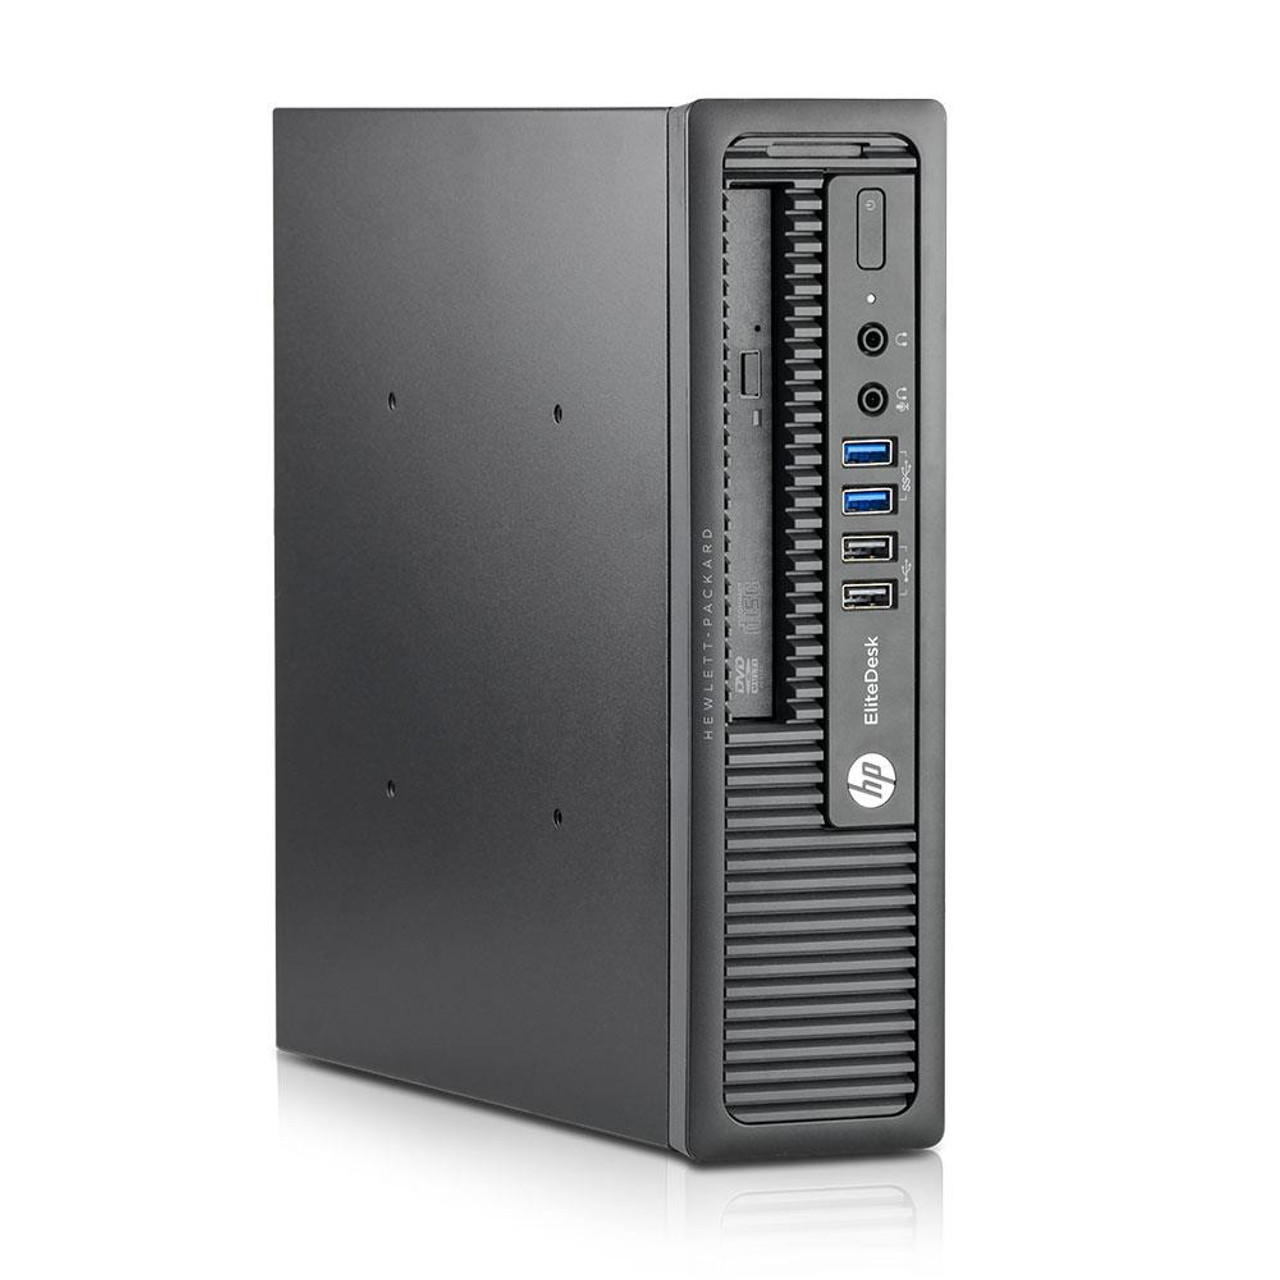 HP EliteDesk 800 G1 USFF Desktop Computer PC i5-4570s Quad-Core 2.9GHz 8GB  RAM 1TB Windows 10 Pro